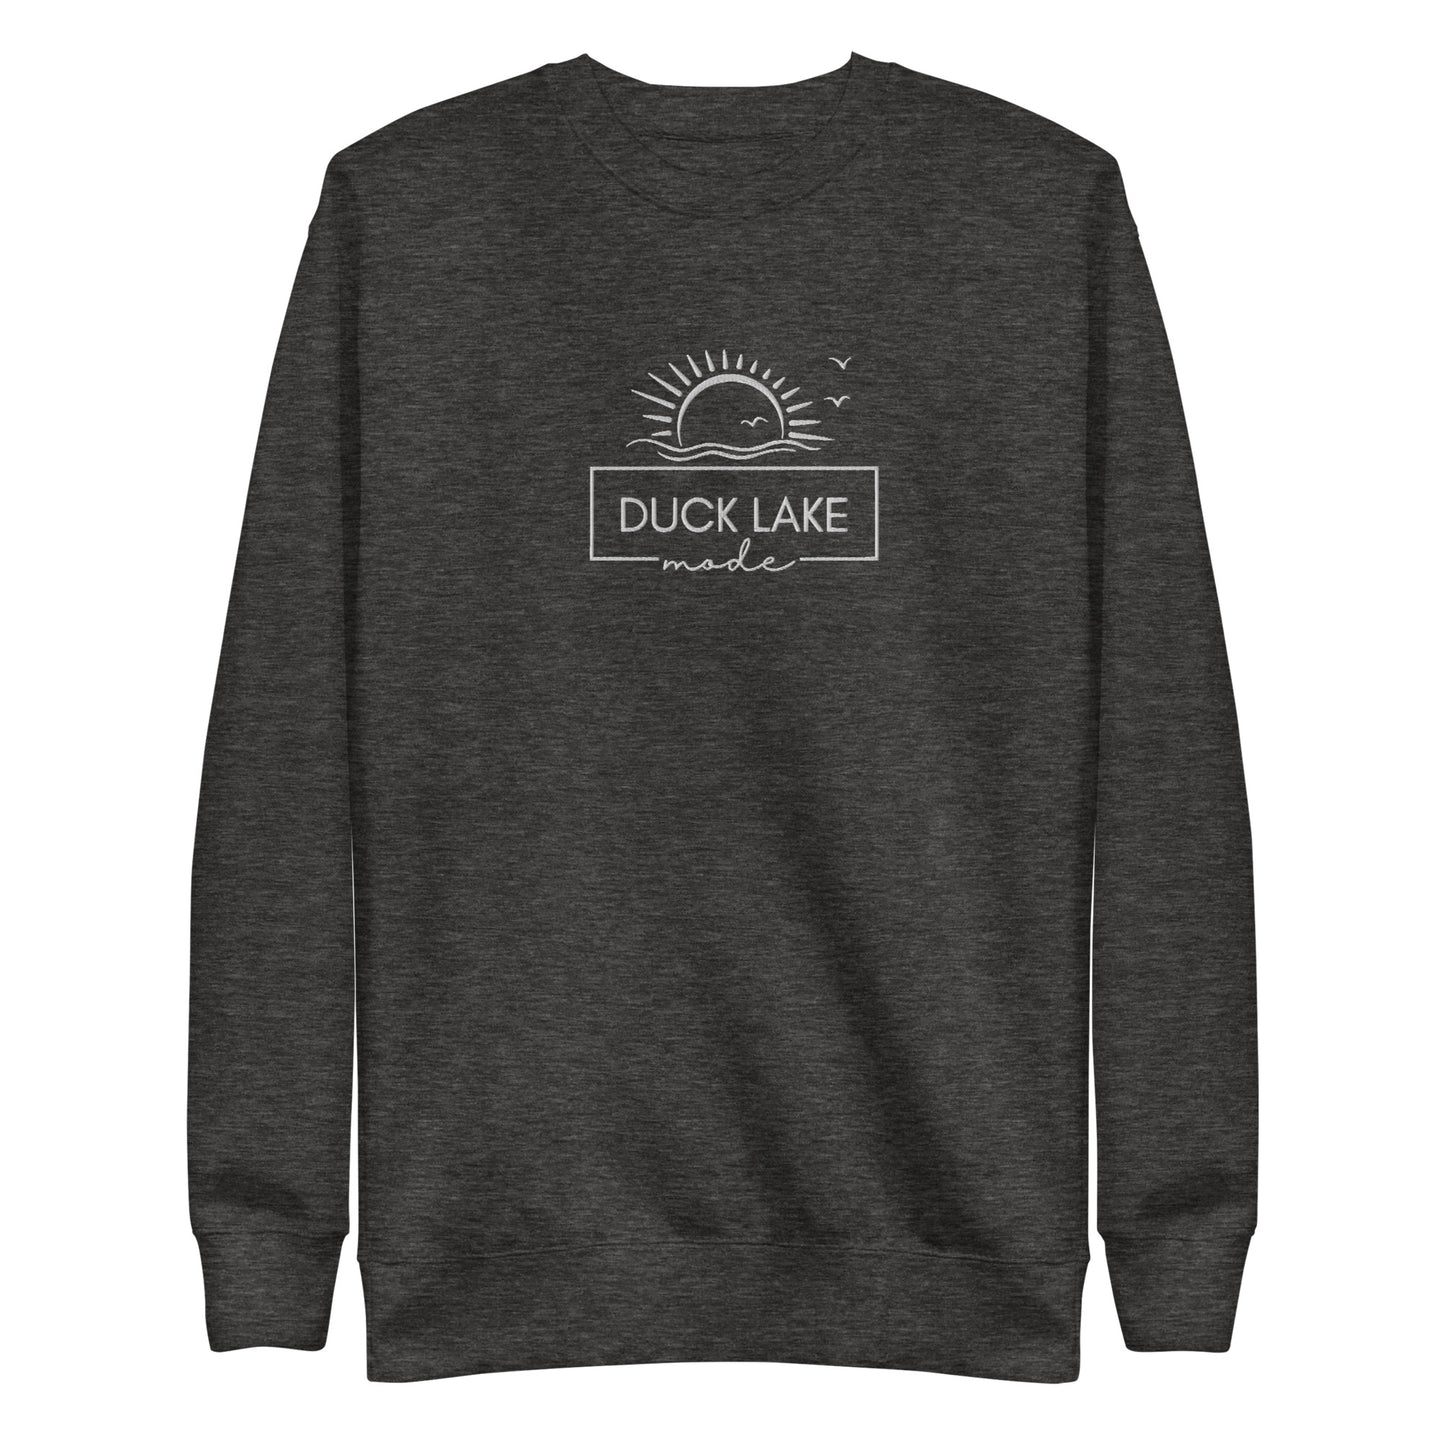 Duck Lake Embroidered Sweatshirt Unisex Premium Sweatshirt